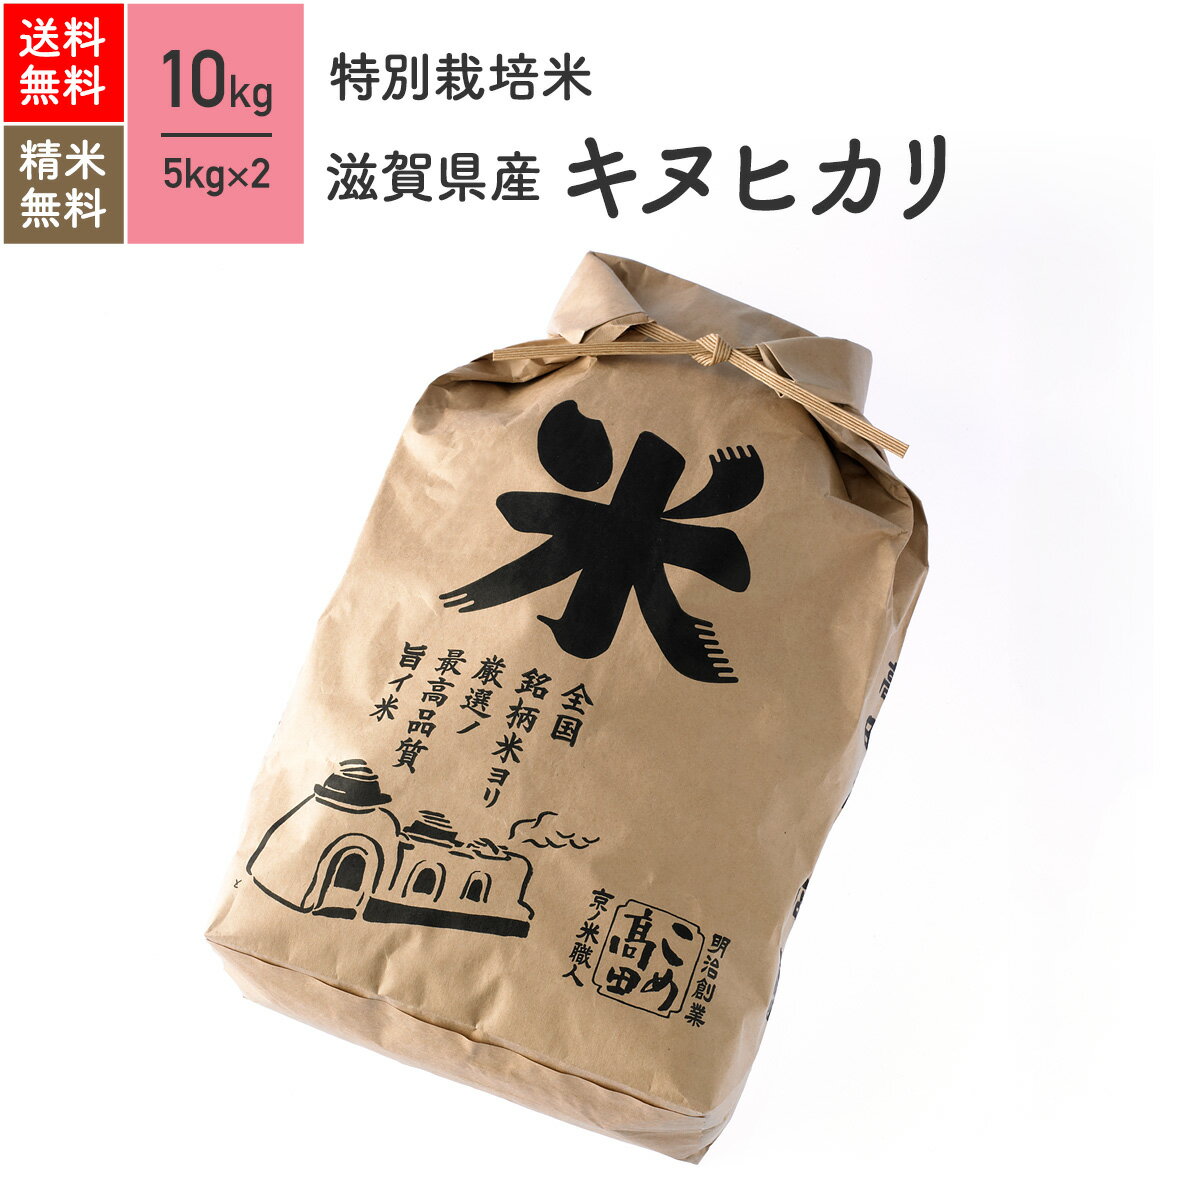 10kg キヌヒカリ 滋賀県産 特別栽培